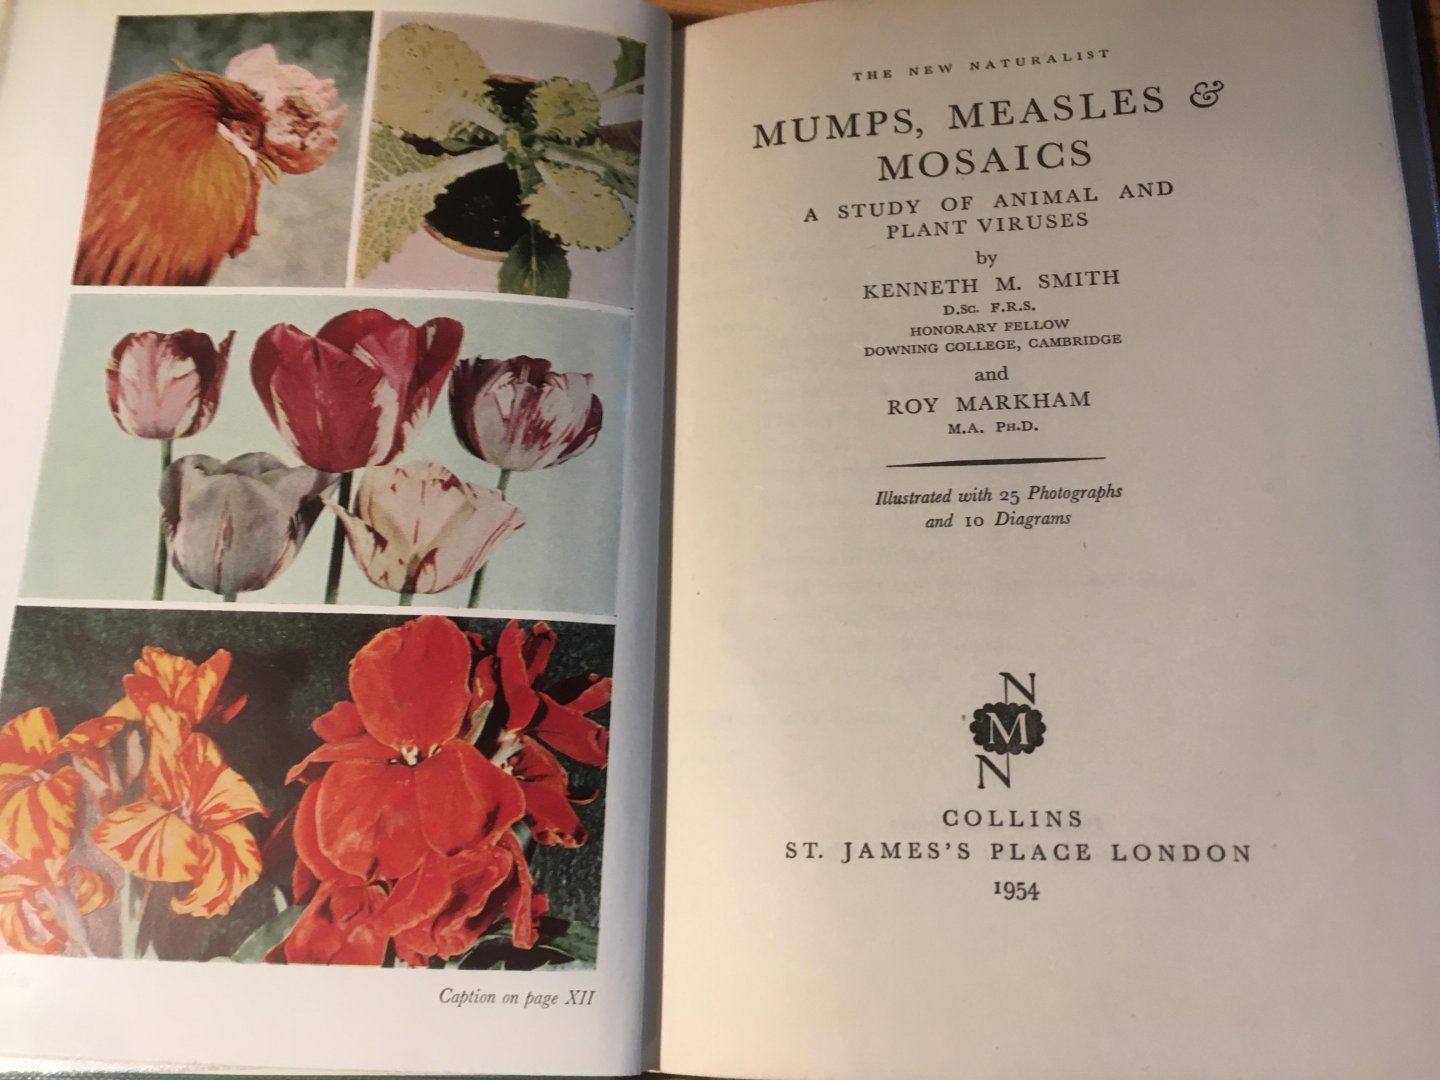 Smith, Kenneth M & Roy Markham - Mumps, Measles and Mosaics